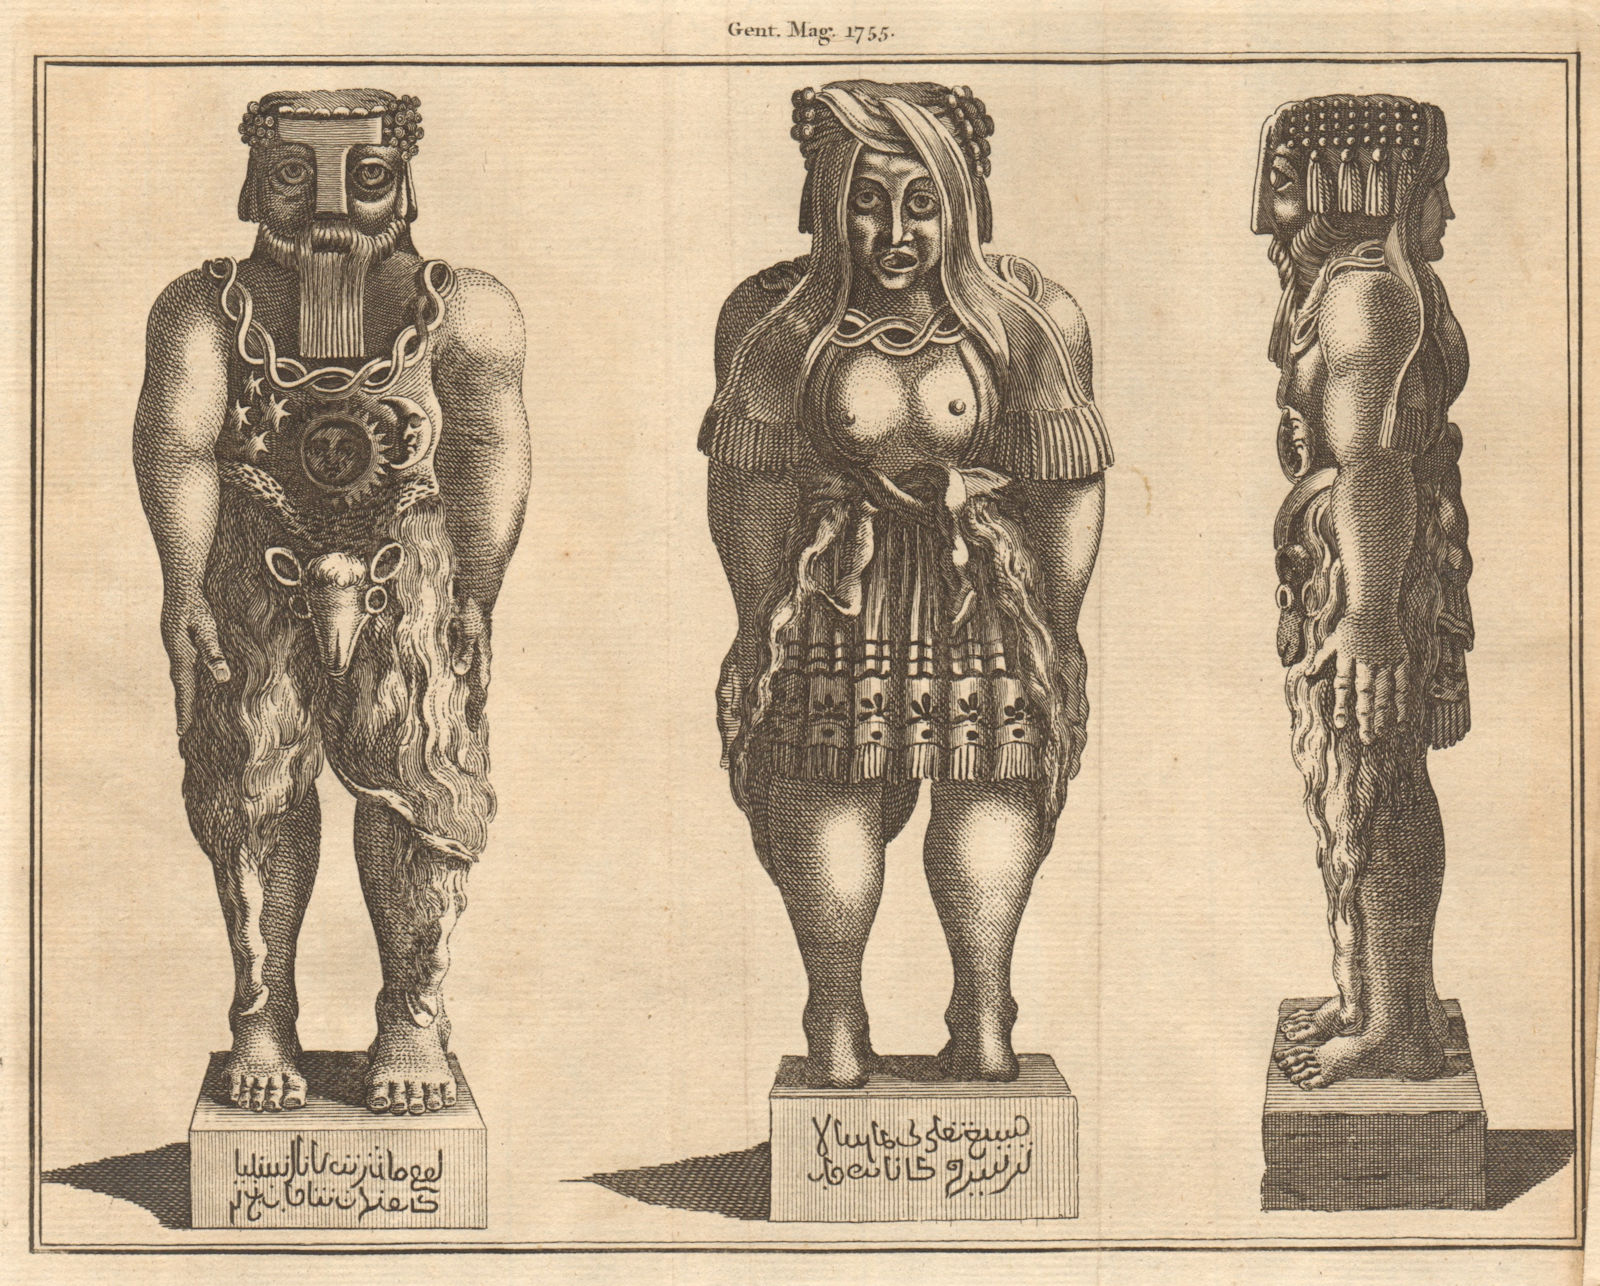 Two faced man/woman statue, found in Smyrna/Izmir. Turkey 1755 old print